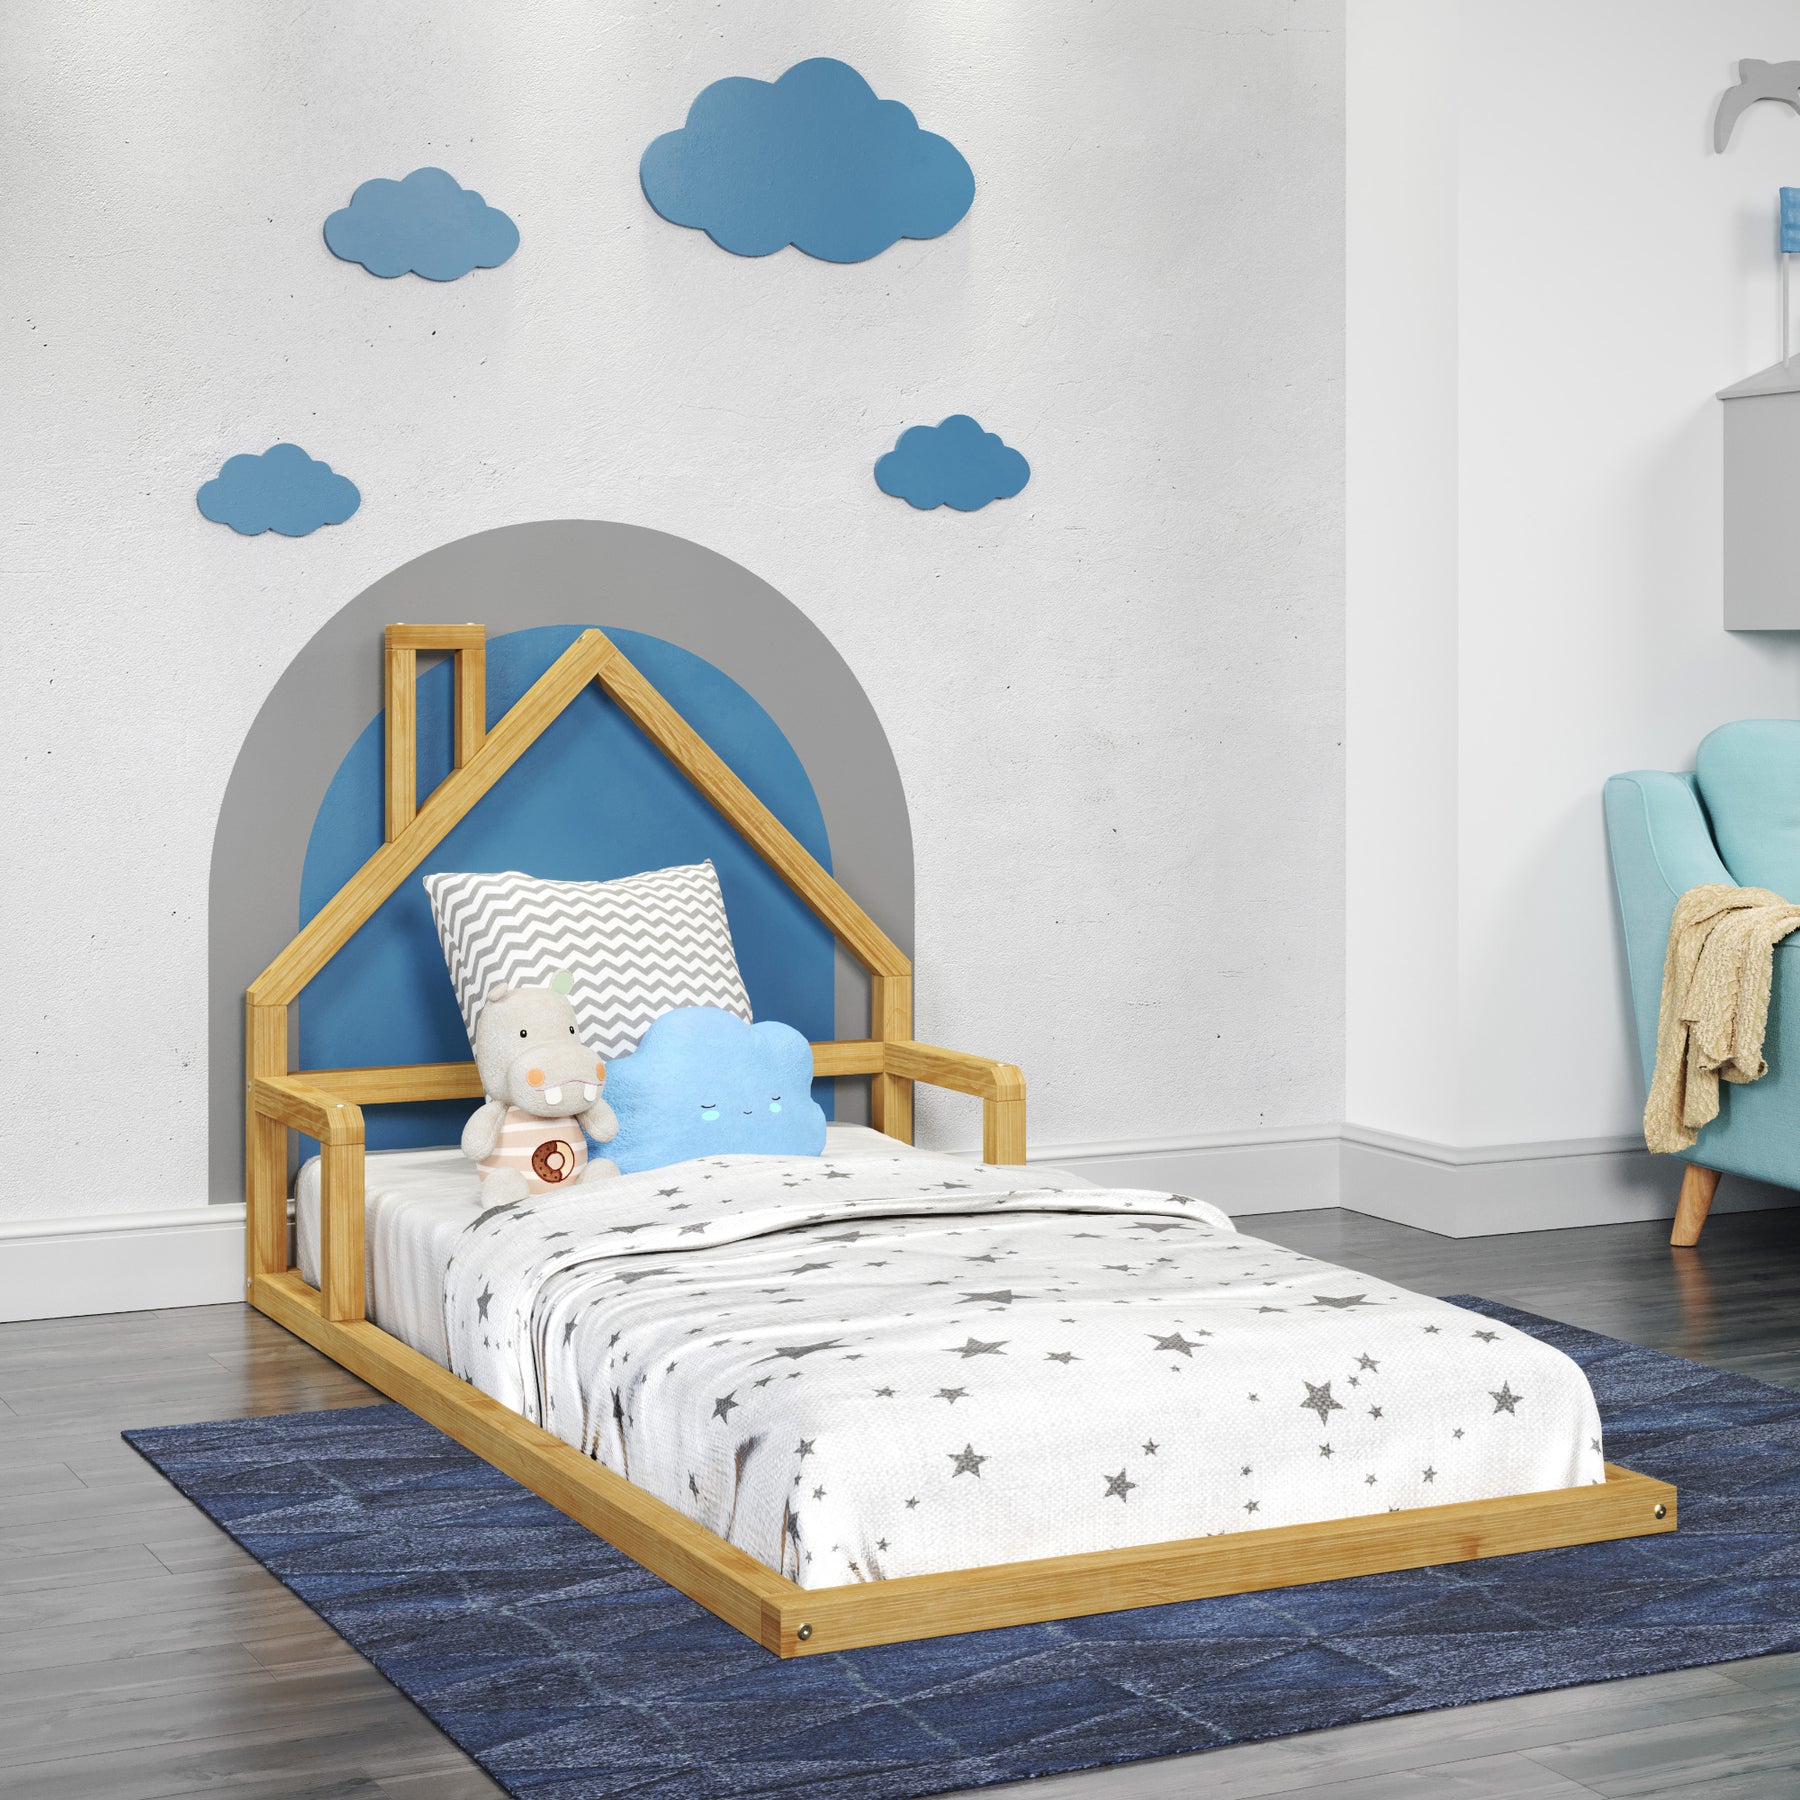 Casita Kids Montessori inspired Wood Floor Bed - Solid Pine Wood - Eco Friendly - Modern Design - PKCASTFB